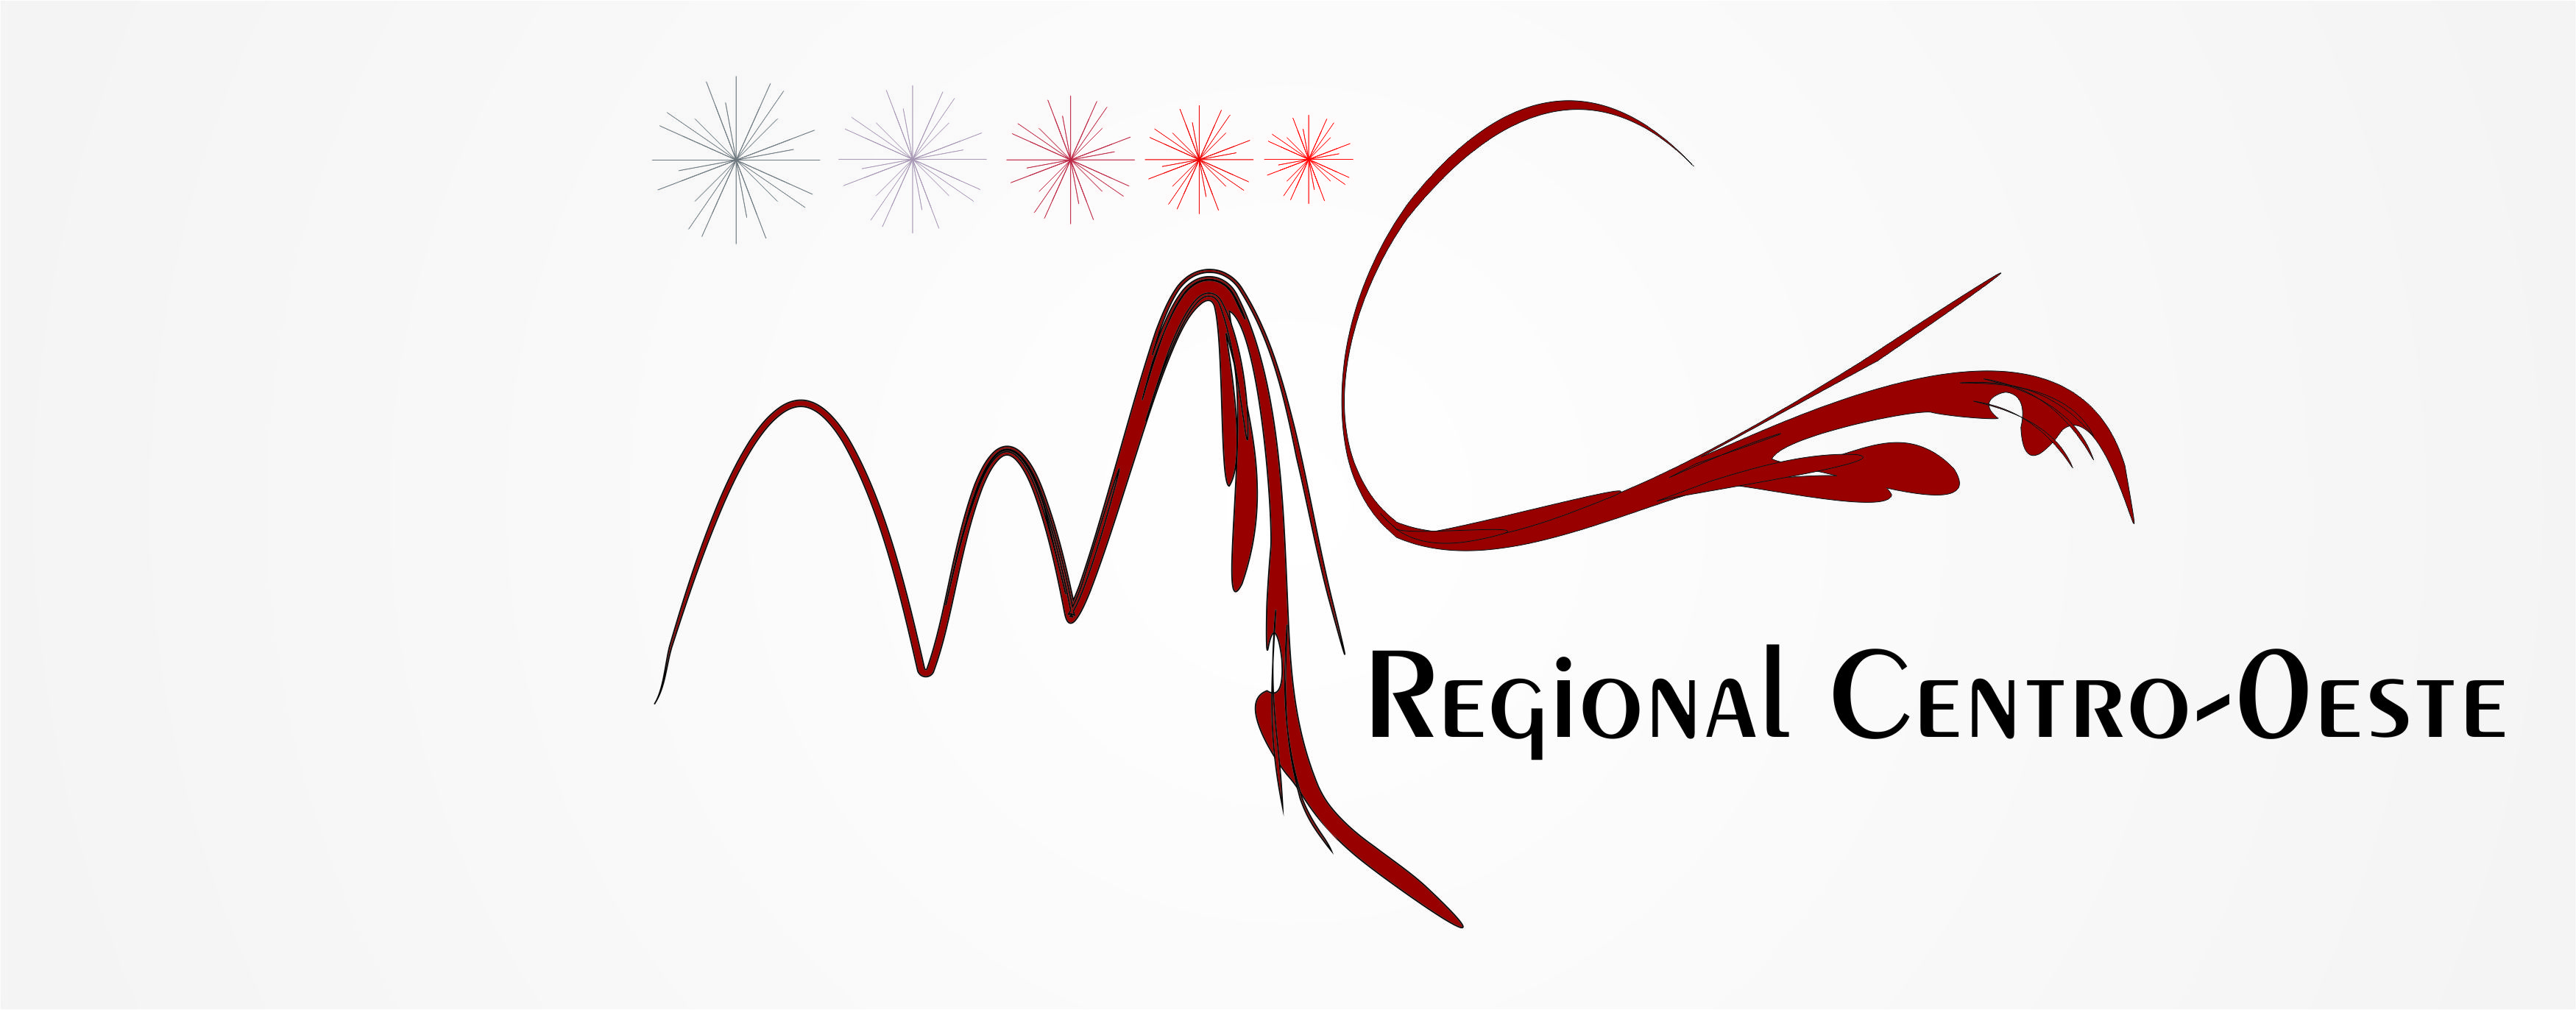 Logo Regionais MC centro-oeste